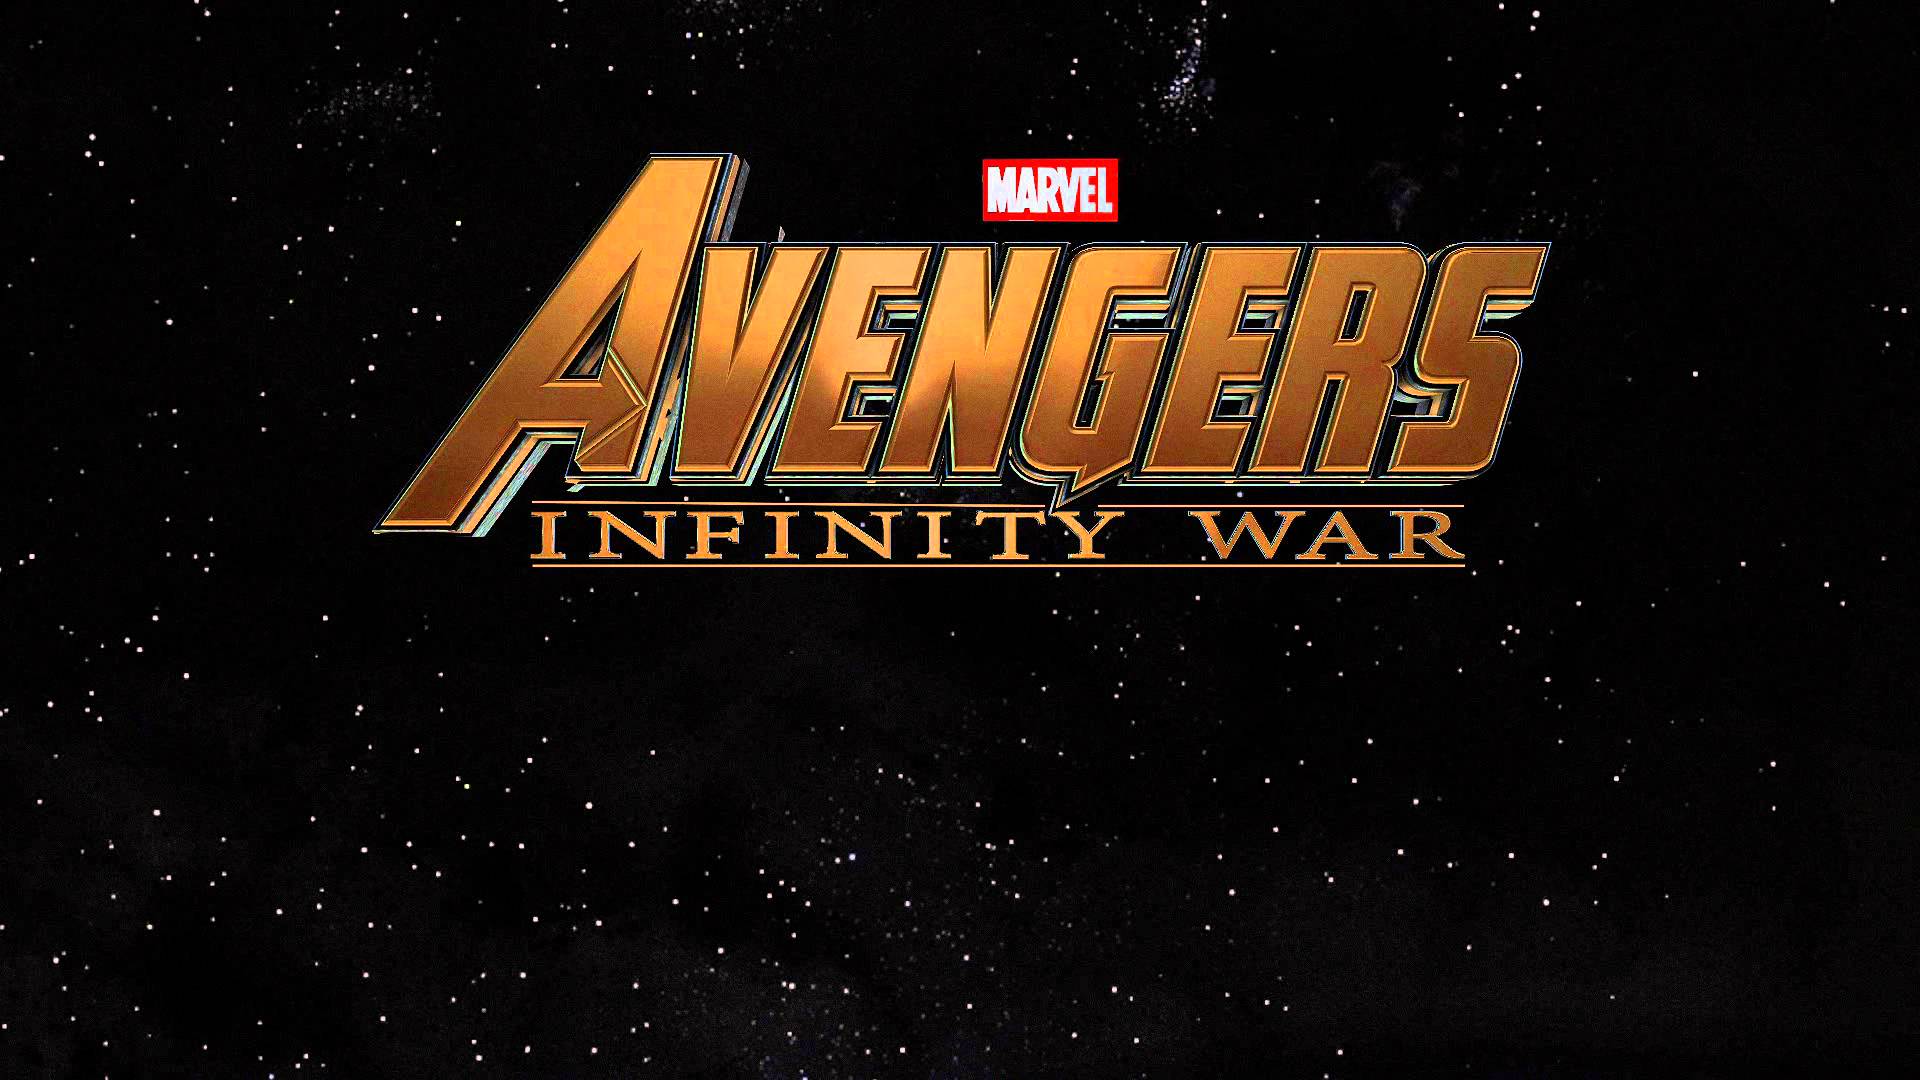 Marvel's Avengers: Infinity War Has Officially Begun